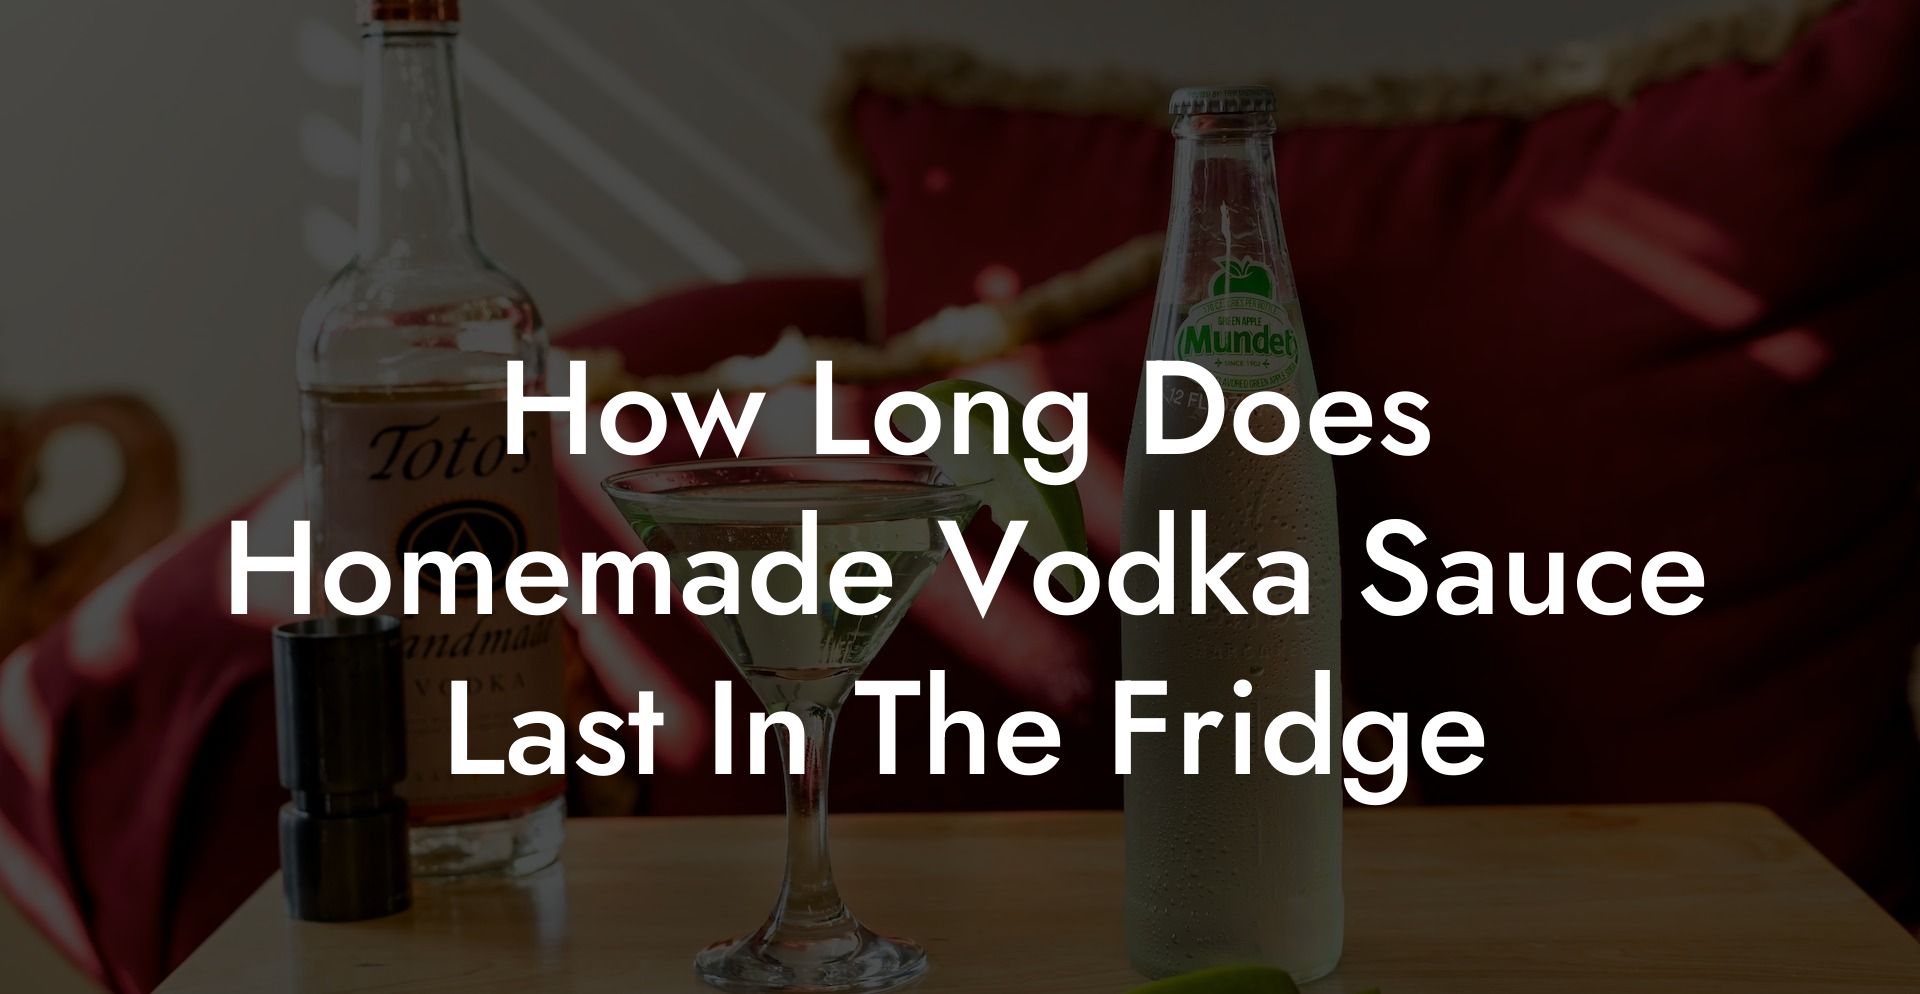 How Long Does Homemade Vodka Sauce Last In The Fridge